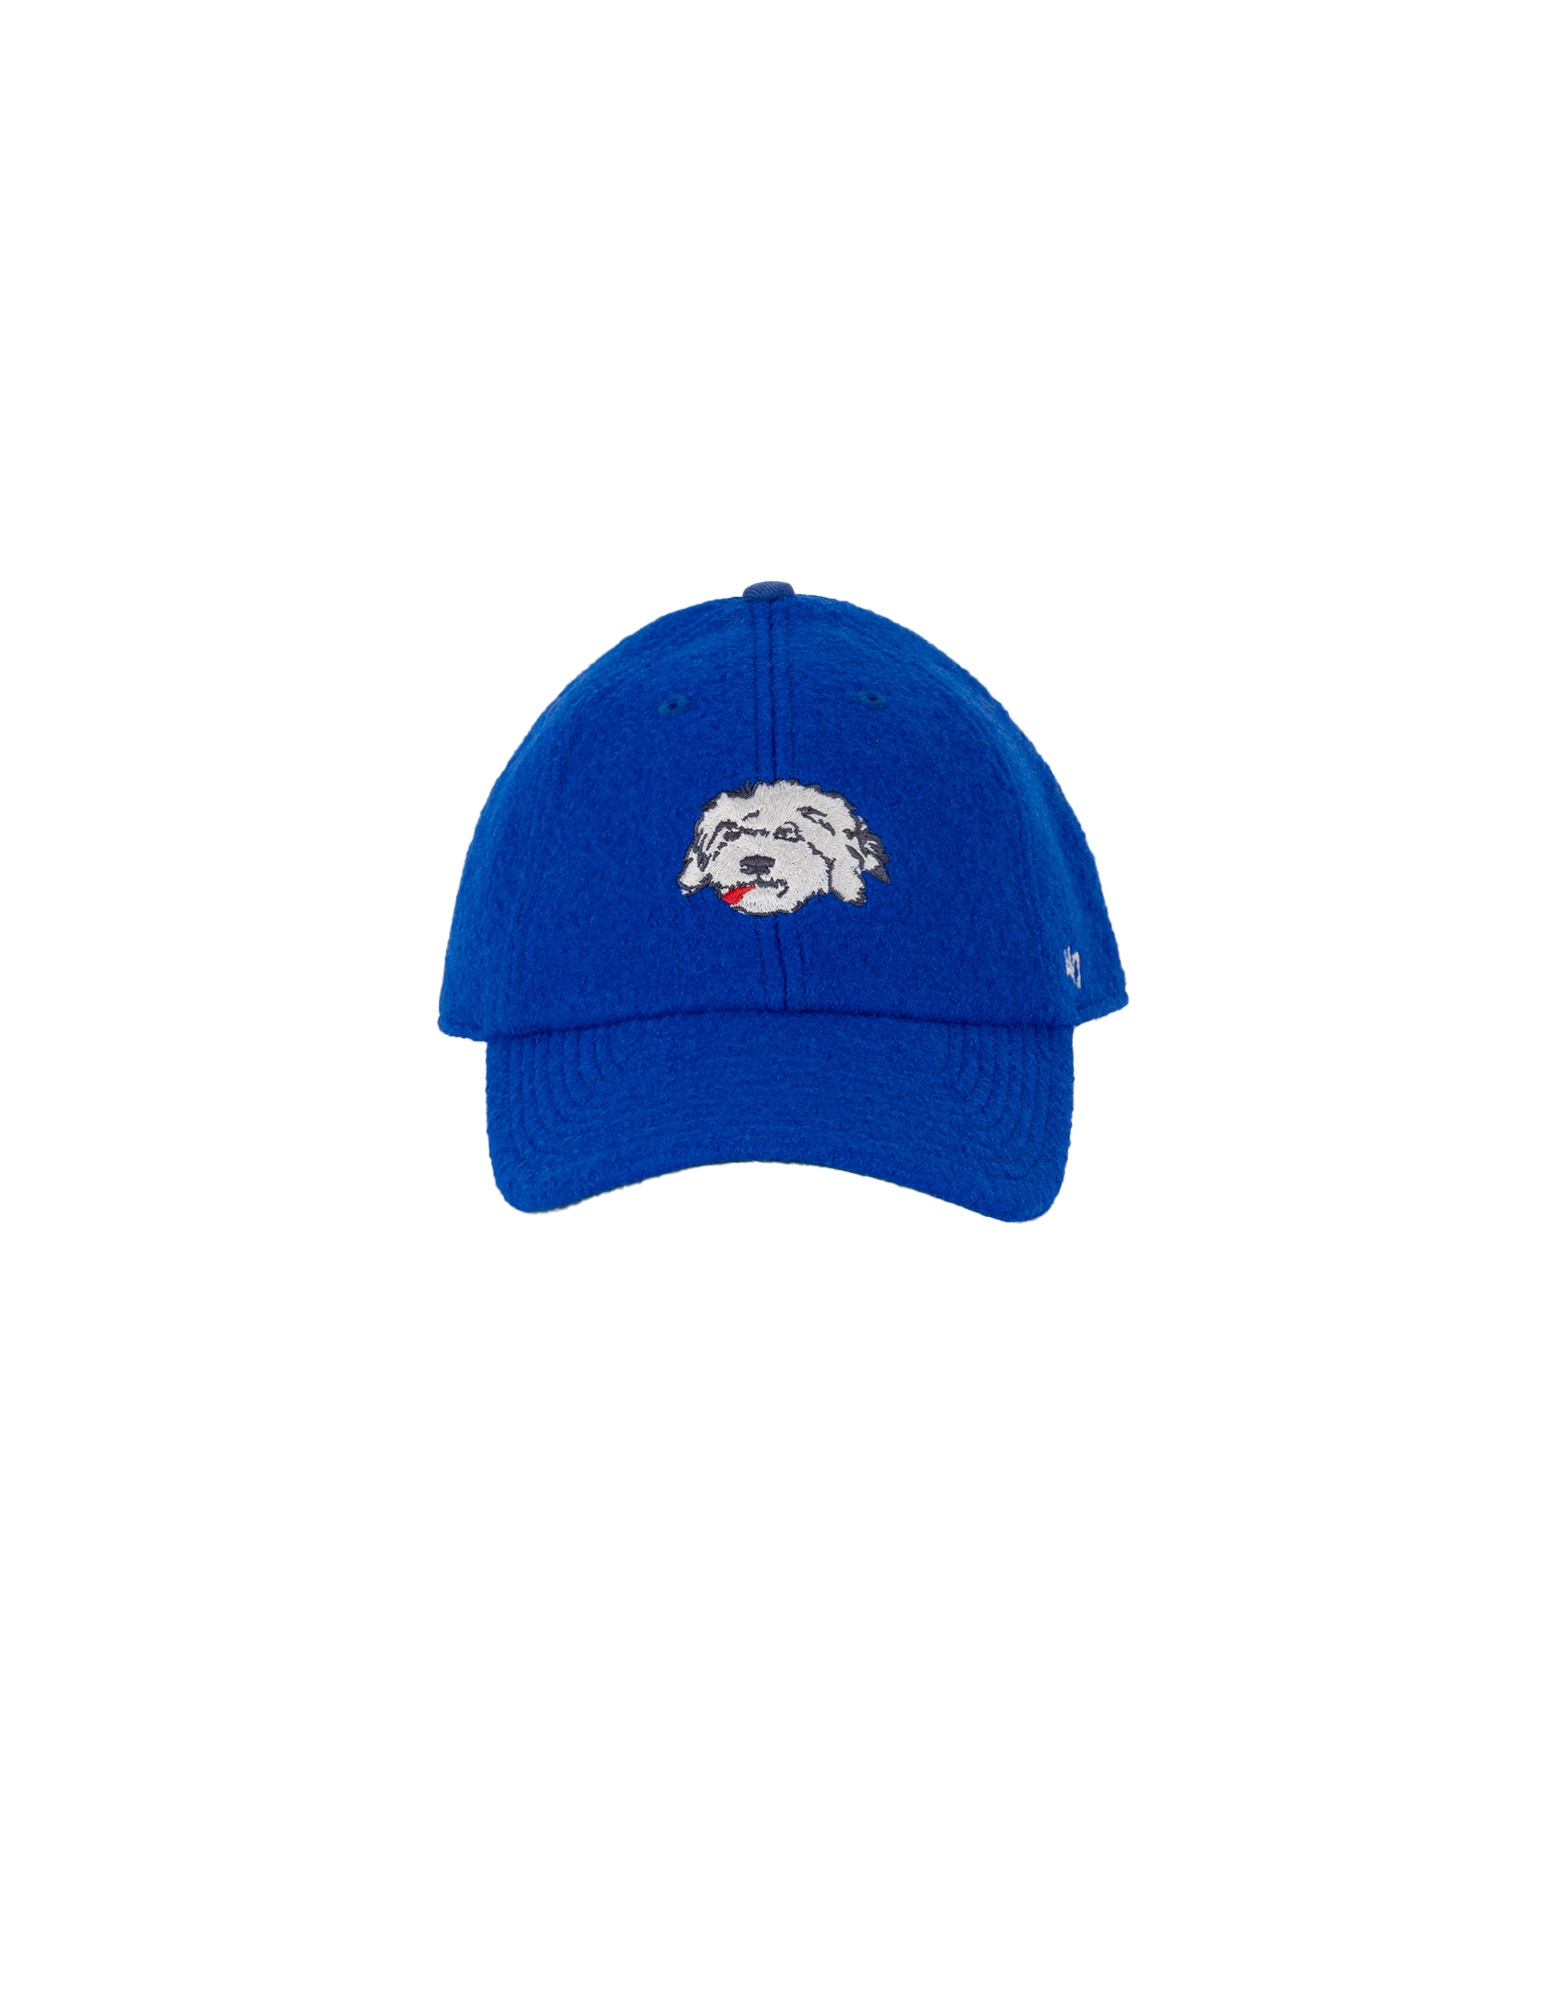 Shaggy Dog Baseball Cap (Blue Royal)